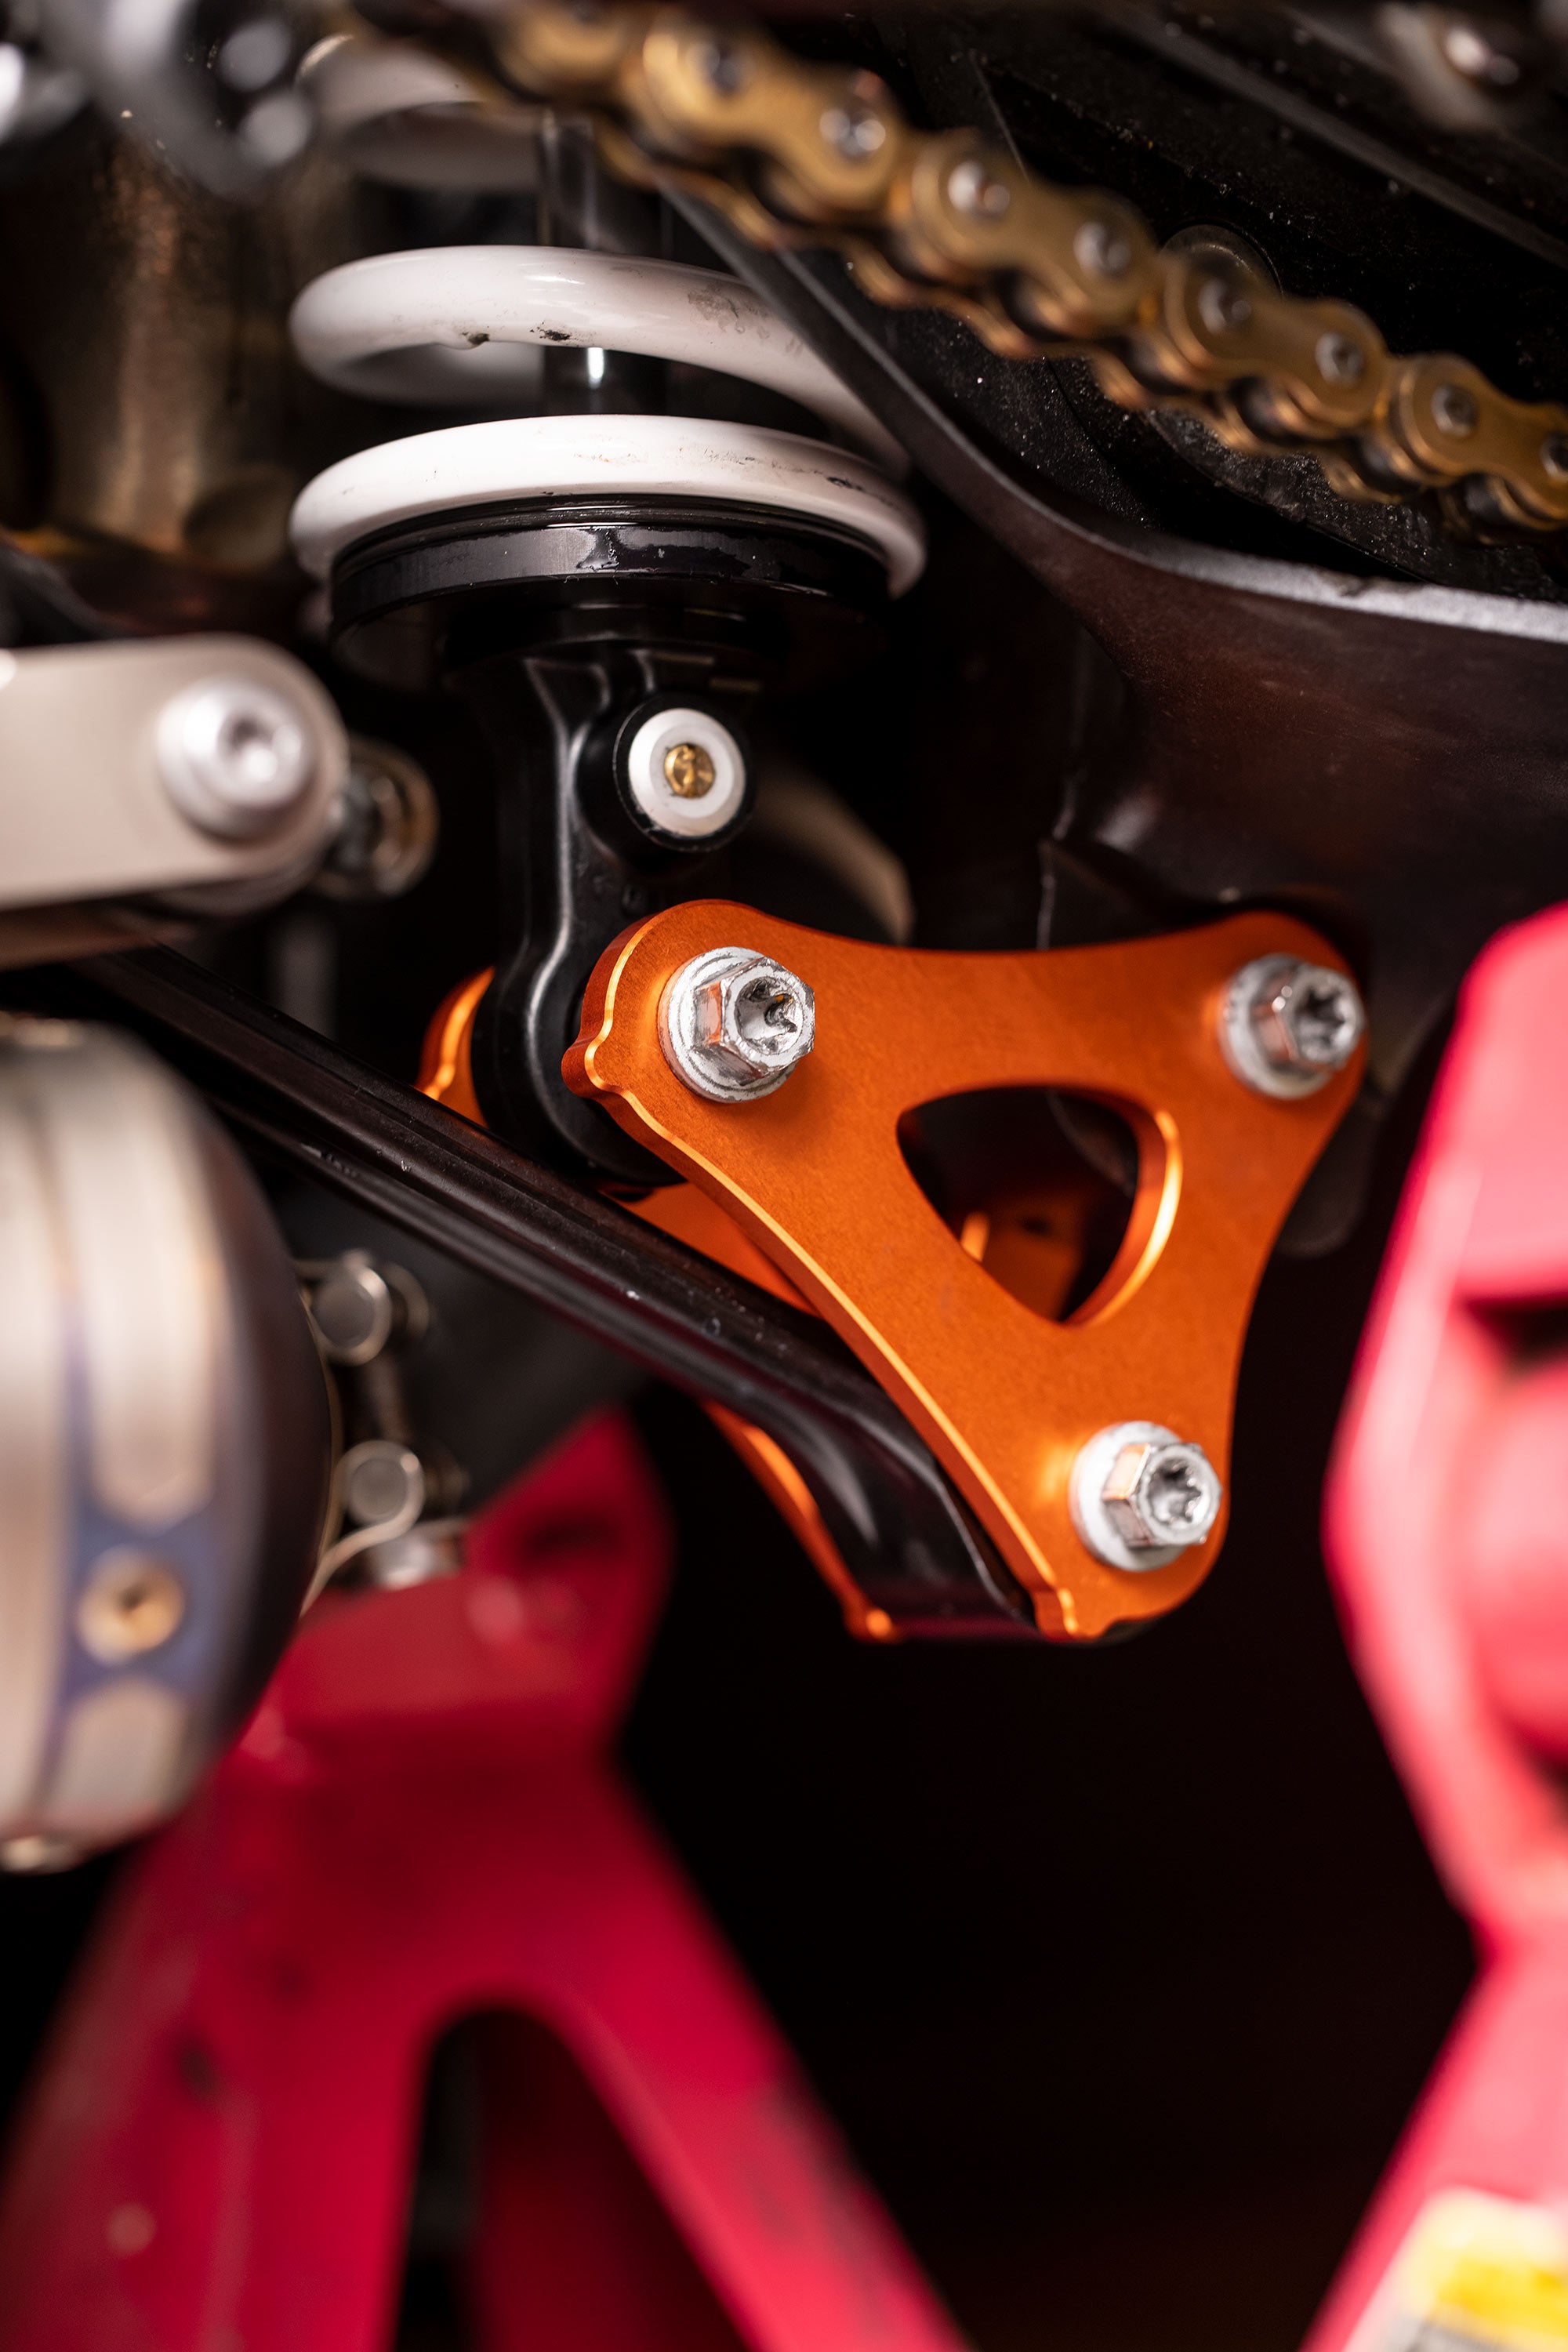 SPORT LINK +15 - Suspension links (pair) adding 15mm ride height for KTM  1290 Super Duke R